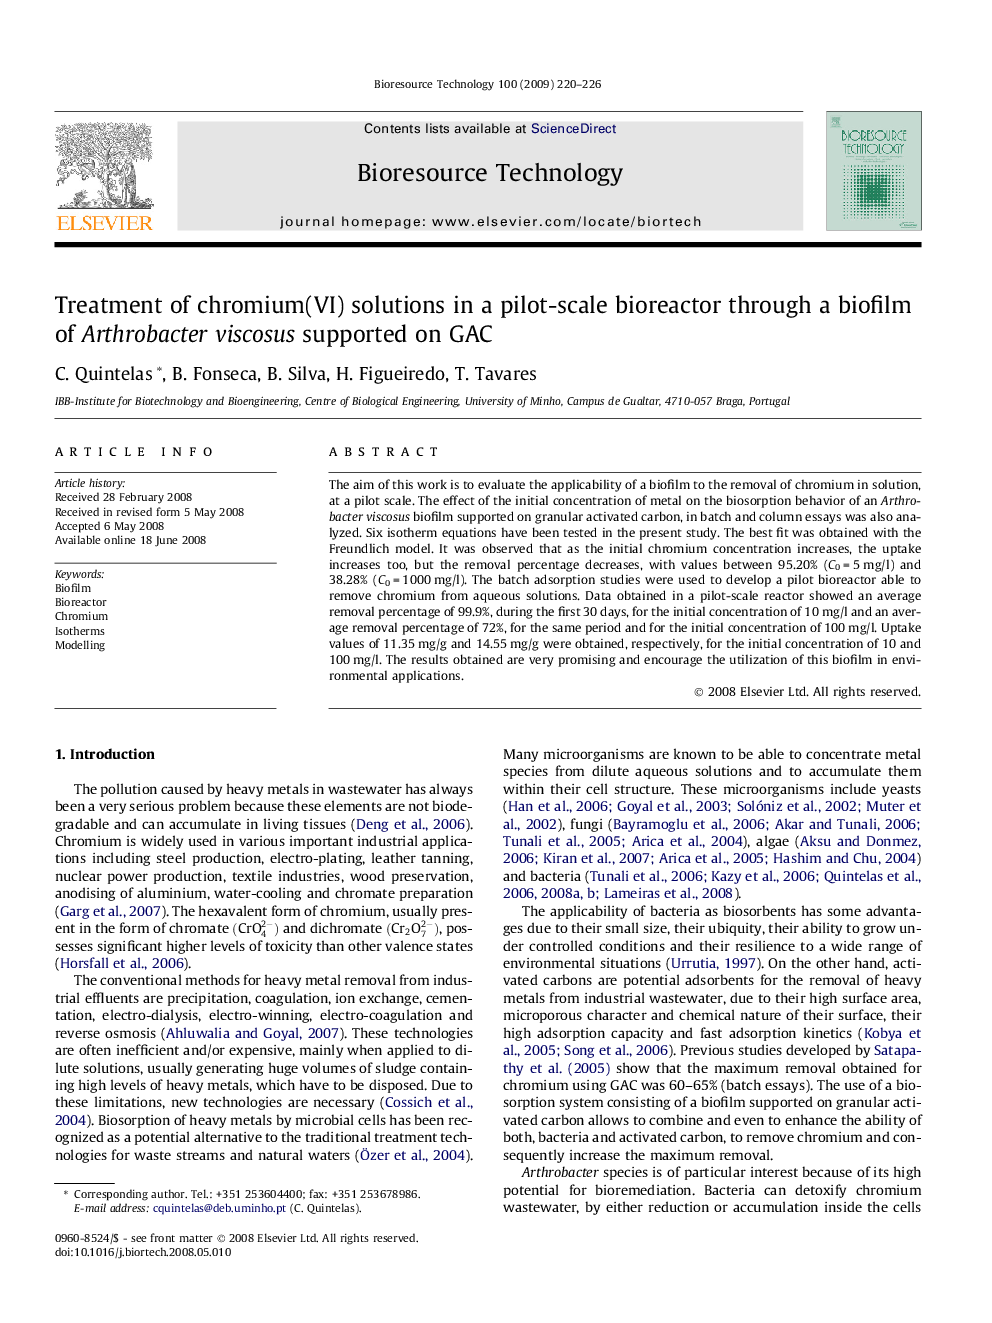 Treatment of chromium(VI) solutions in a pilot-scale bioreactor through a biofilm of Arthrobacter viscosus supported on GAC